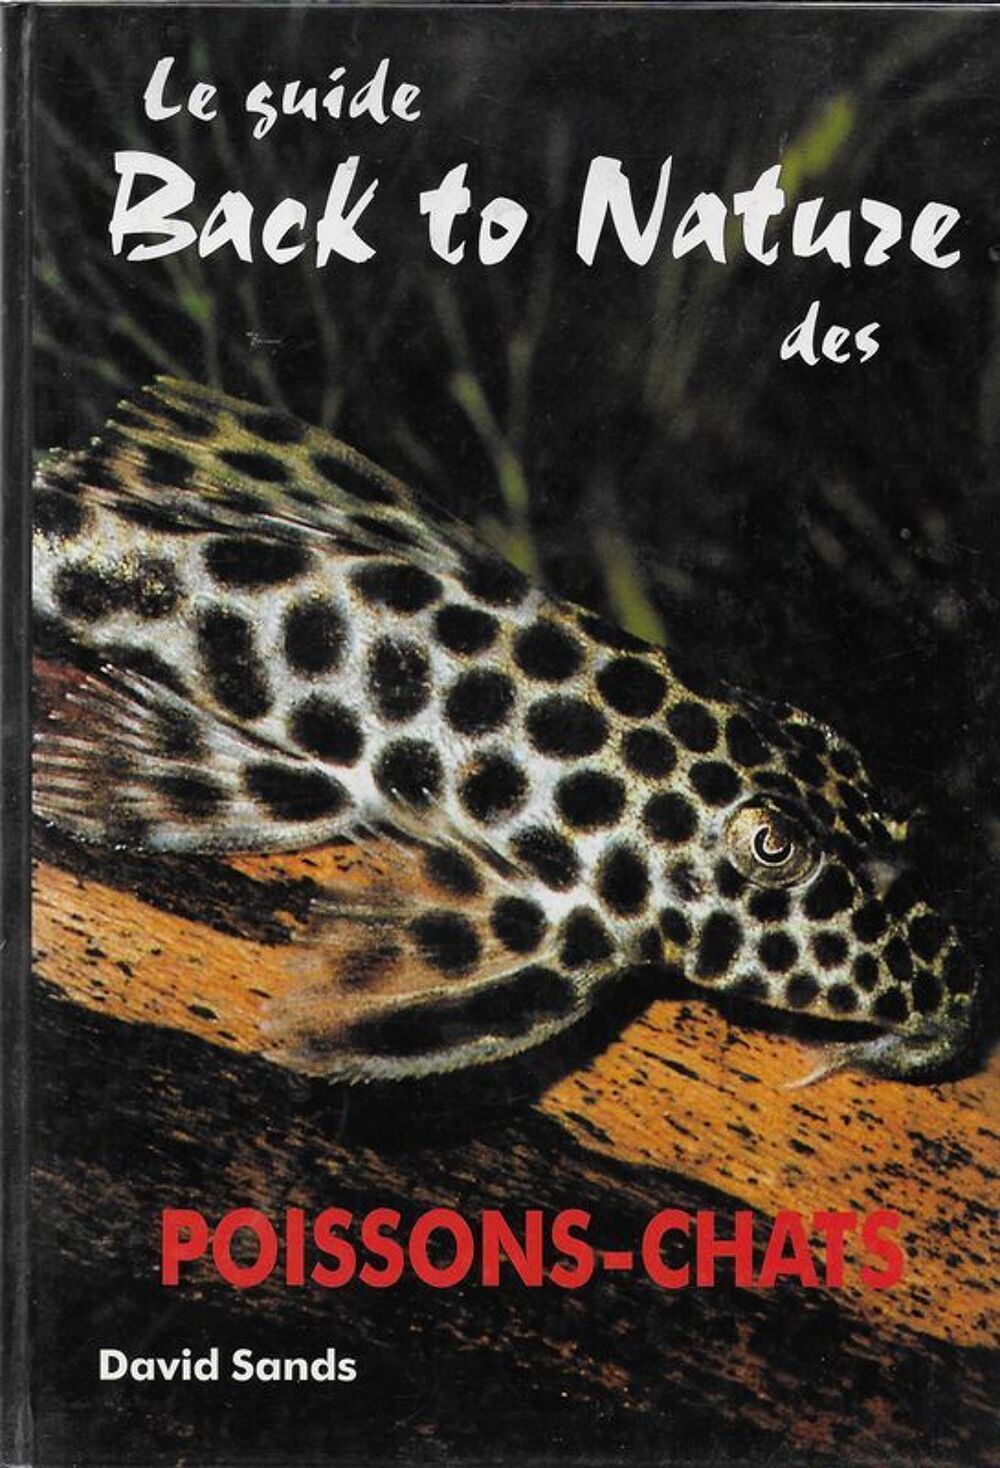 Guide Back To Nature des Poissons-chats / ISBN 3-9805605-3-8 Livres et BD